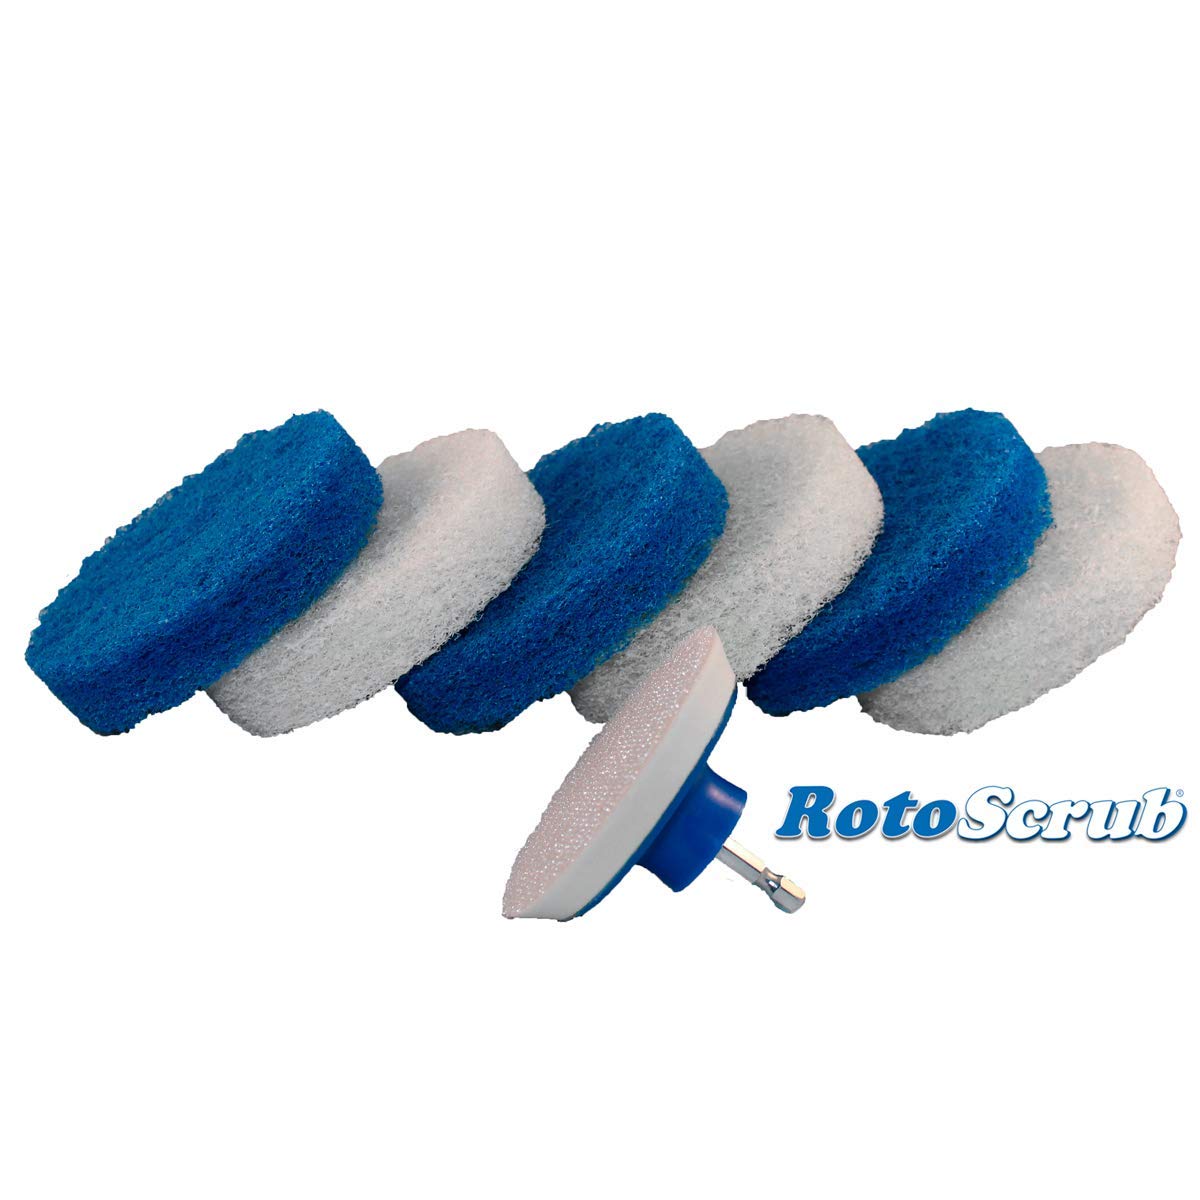 RotoScrub Bathroom Cleaning Scrub Pads + Drill Powered Scrub Brush - Drill Accessory Combo Kit